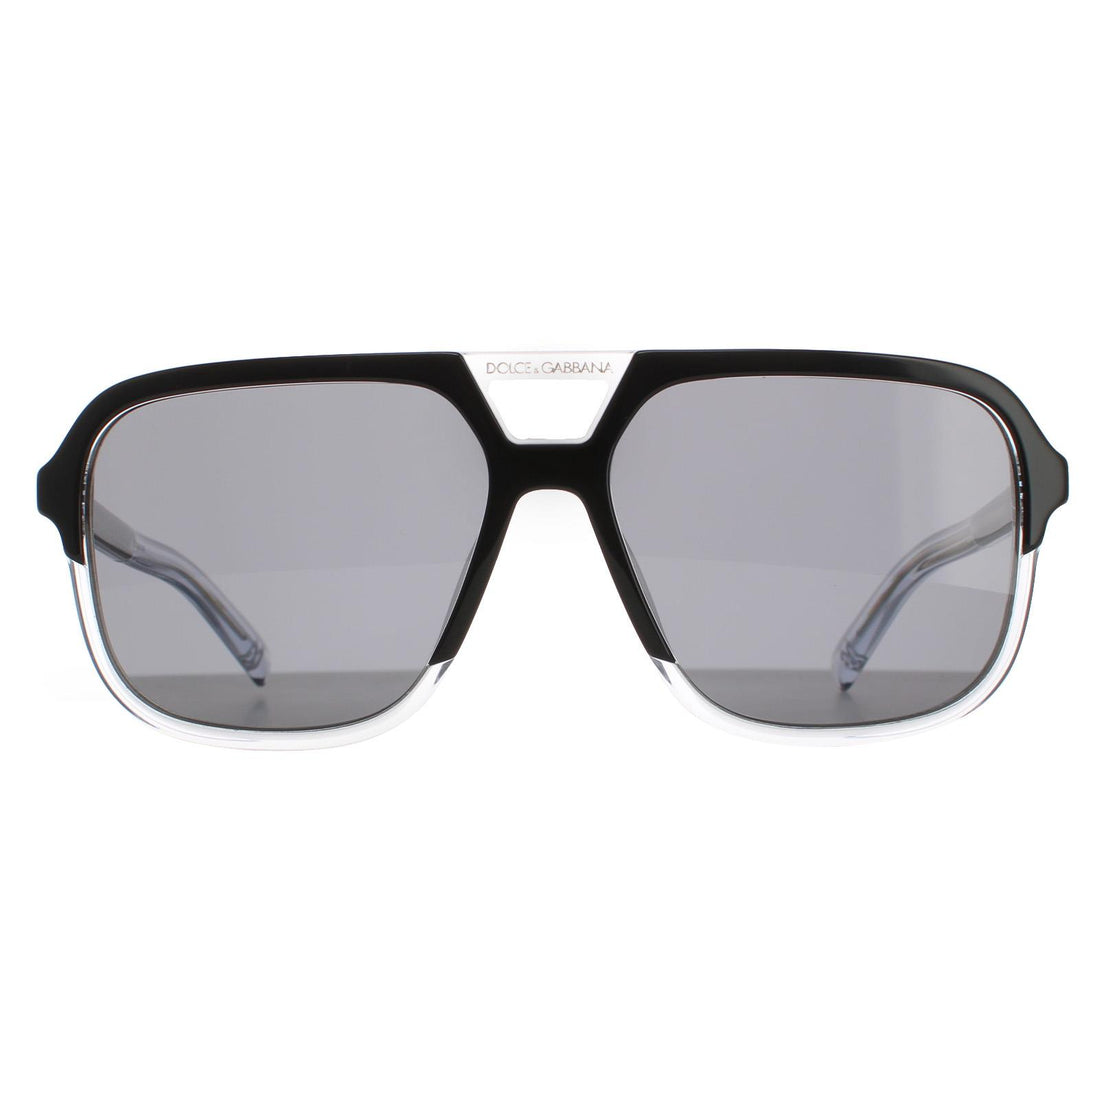 Dolce & Gabbana DG4354 Sunglasses Top Black on Crystal Dark Grey Polarised